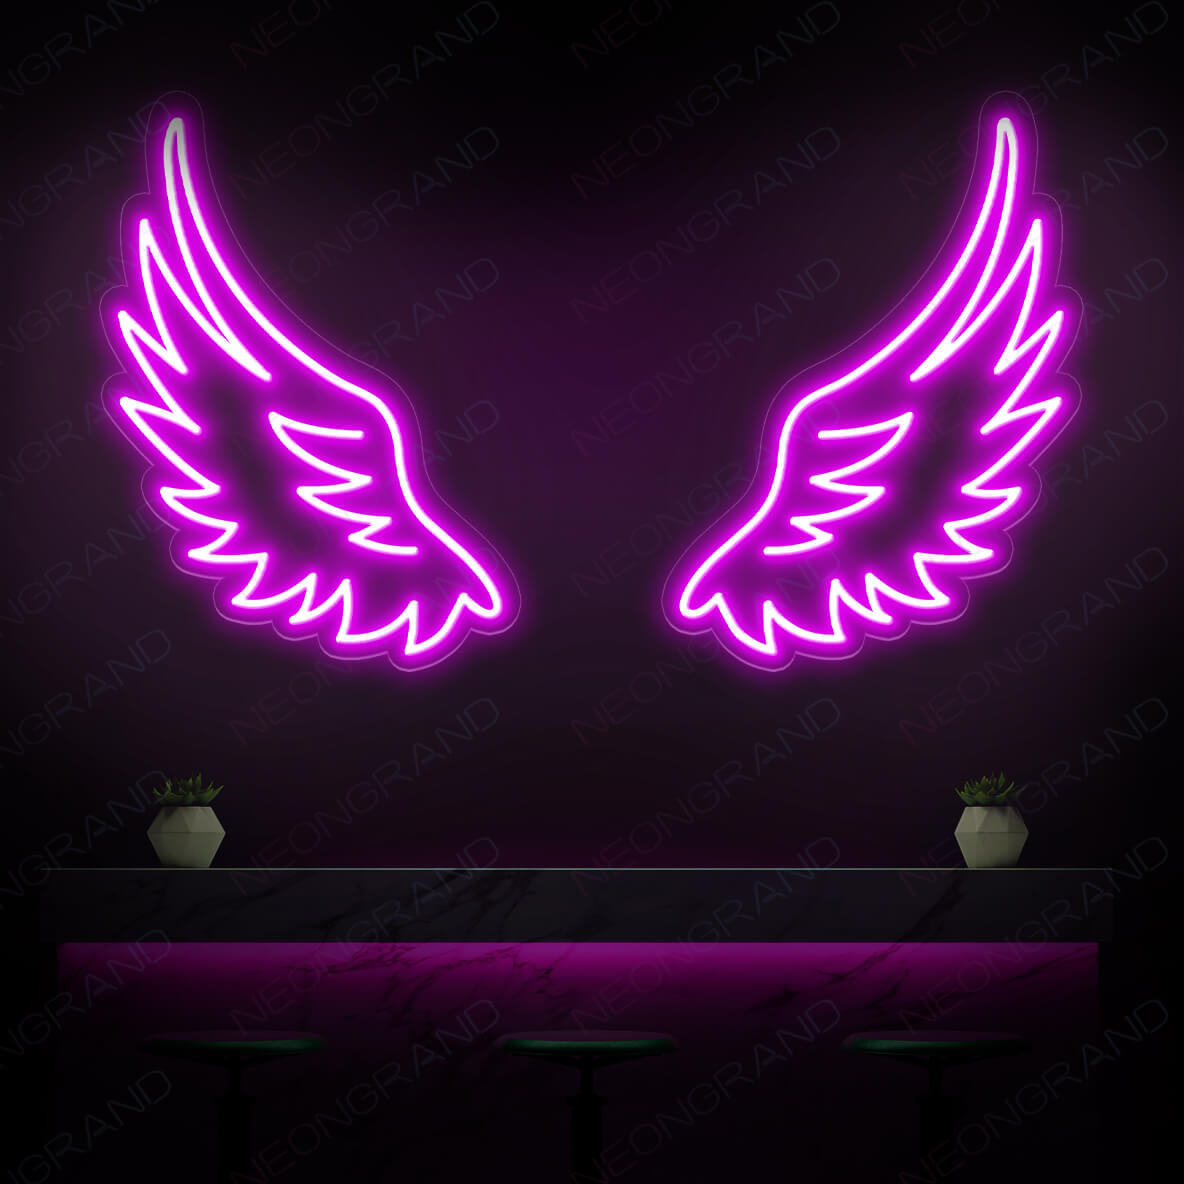 Angel Wings Neon Sign Led Light Bar Neon Signs Purple